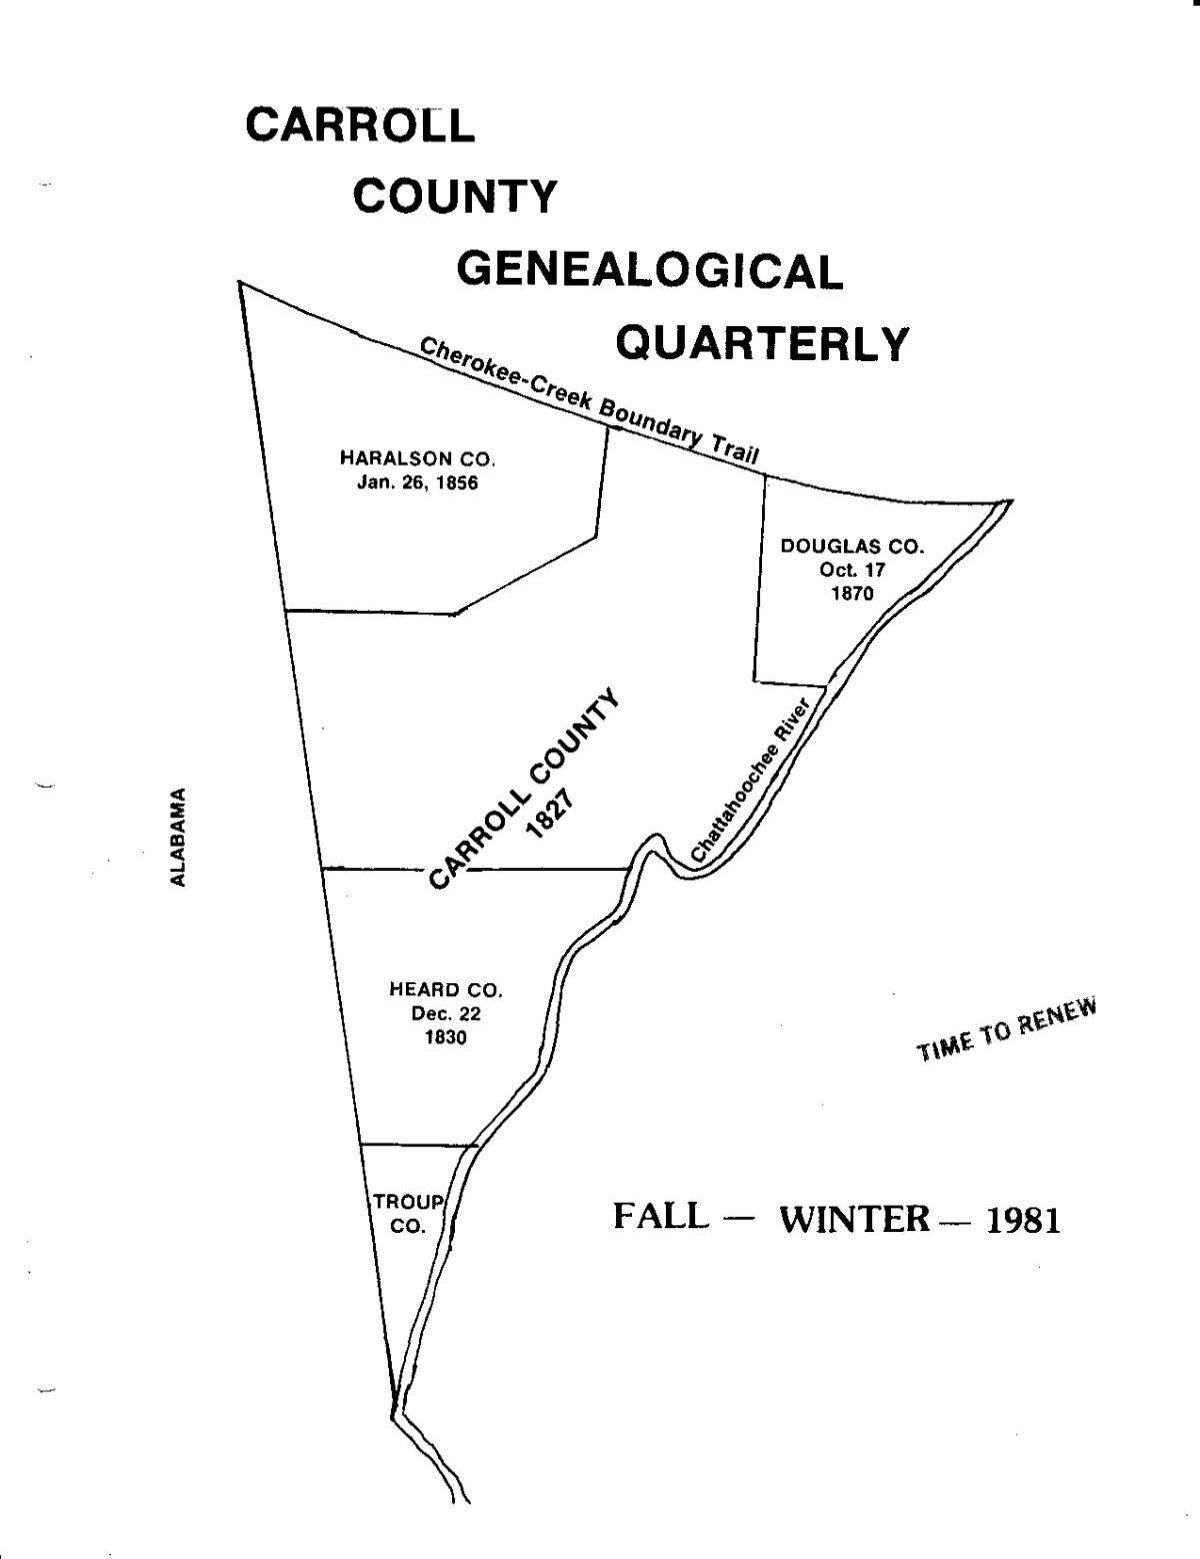 Xta^. - Carroll County Genealogical Society